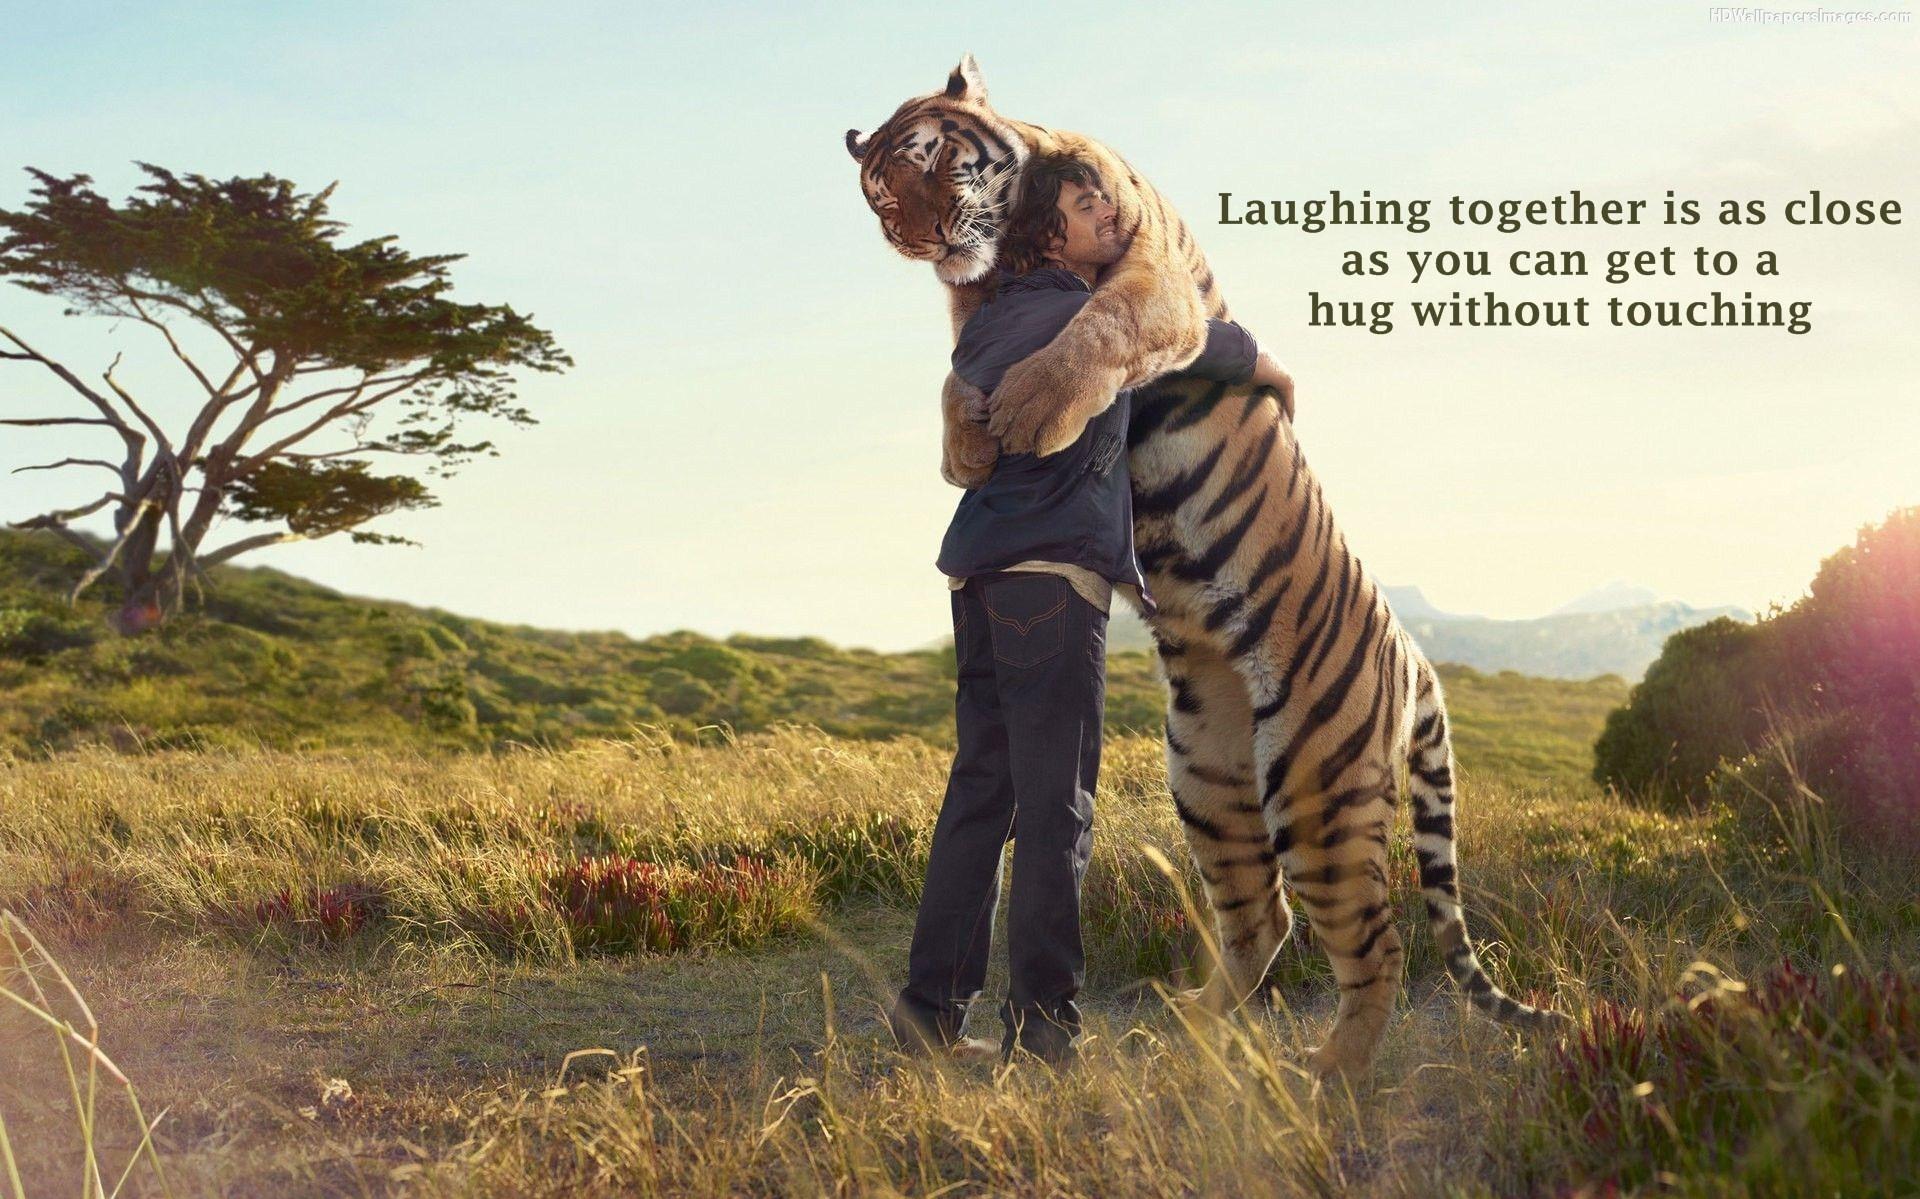 Beautiful Hug Animal Tiger And Men Quotes Images Safari Studio